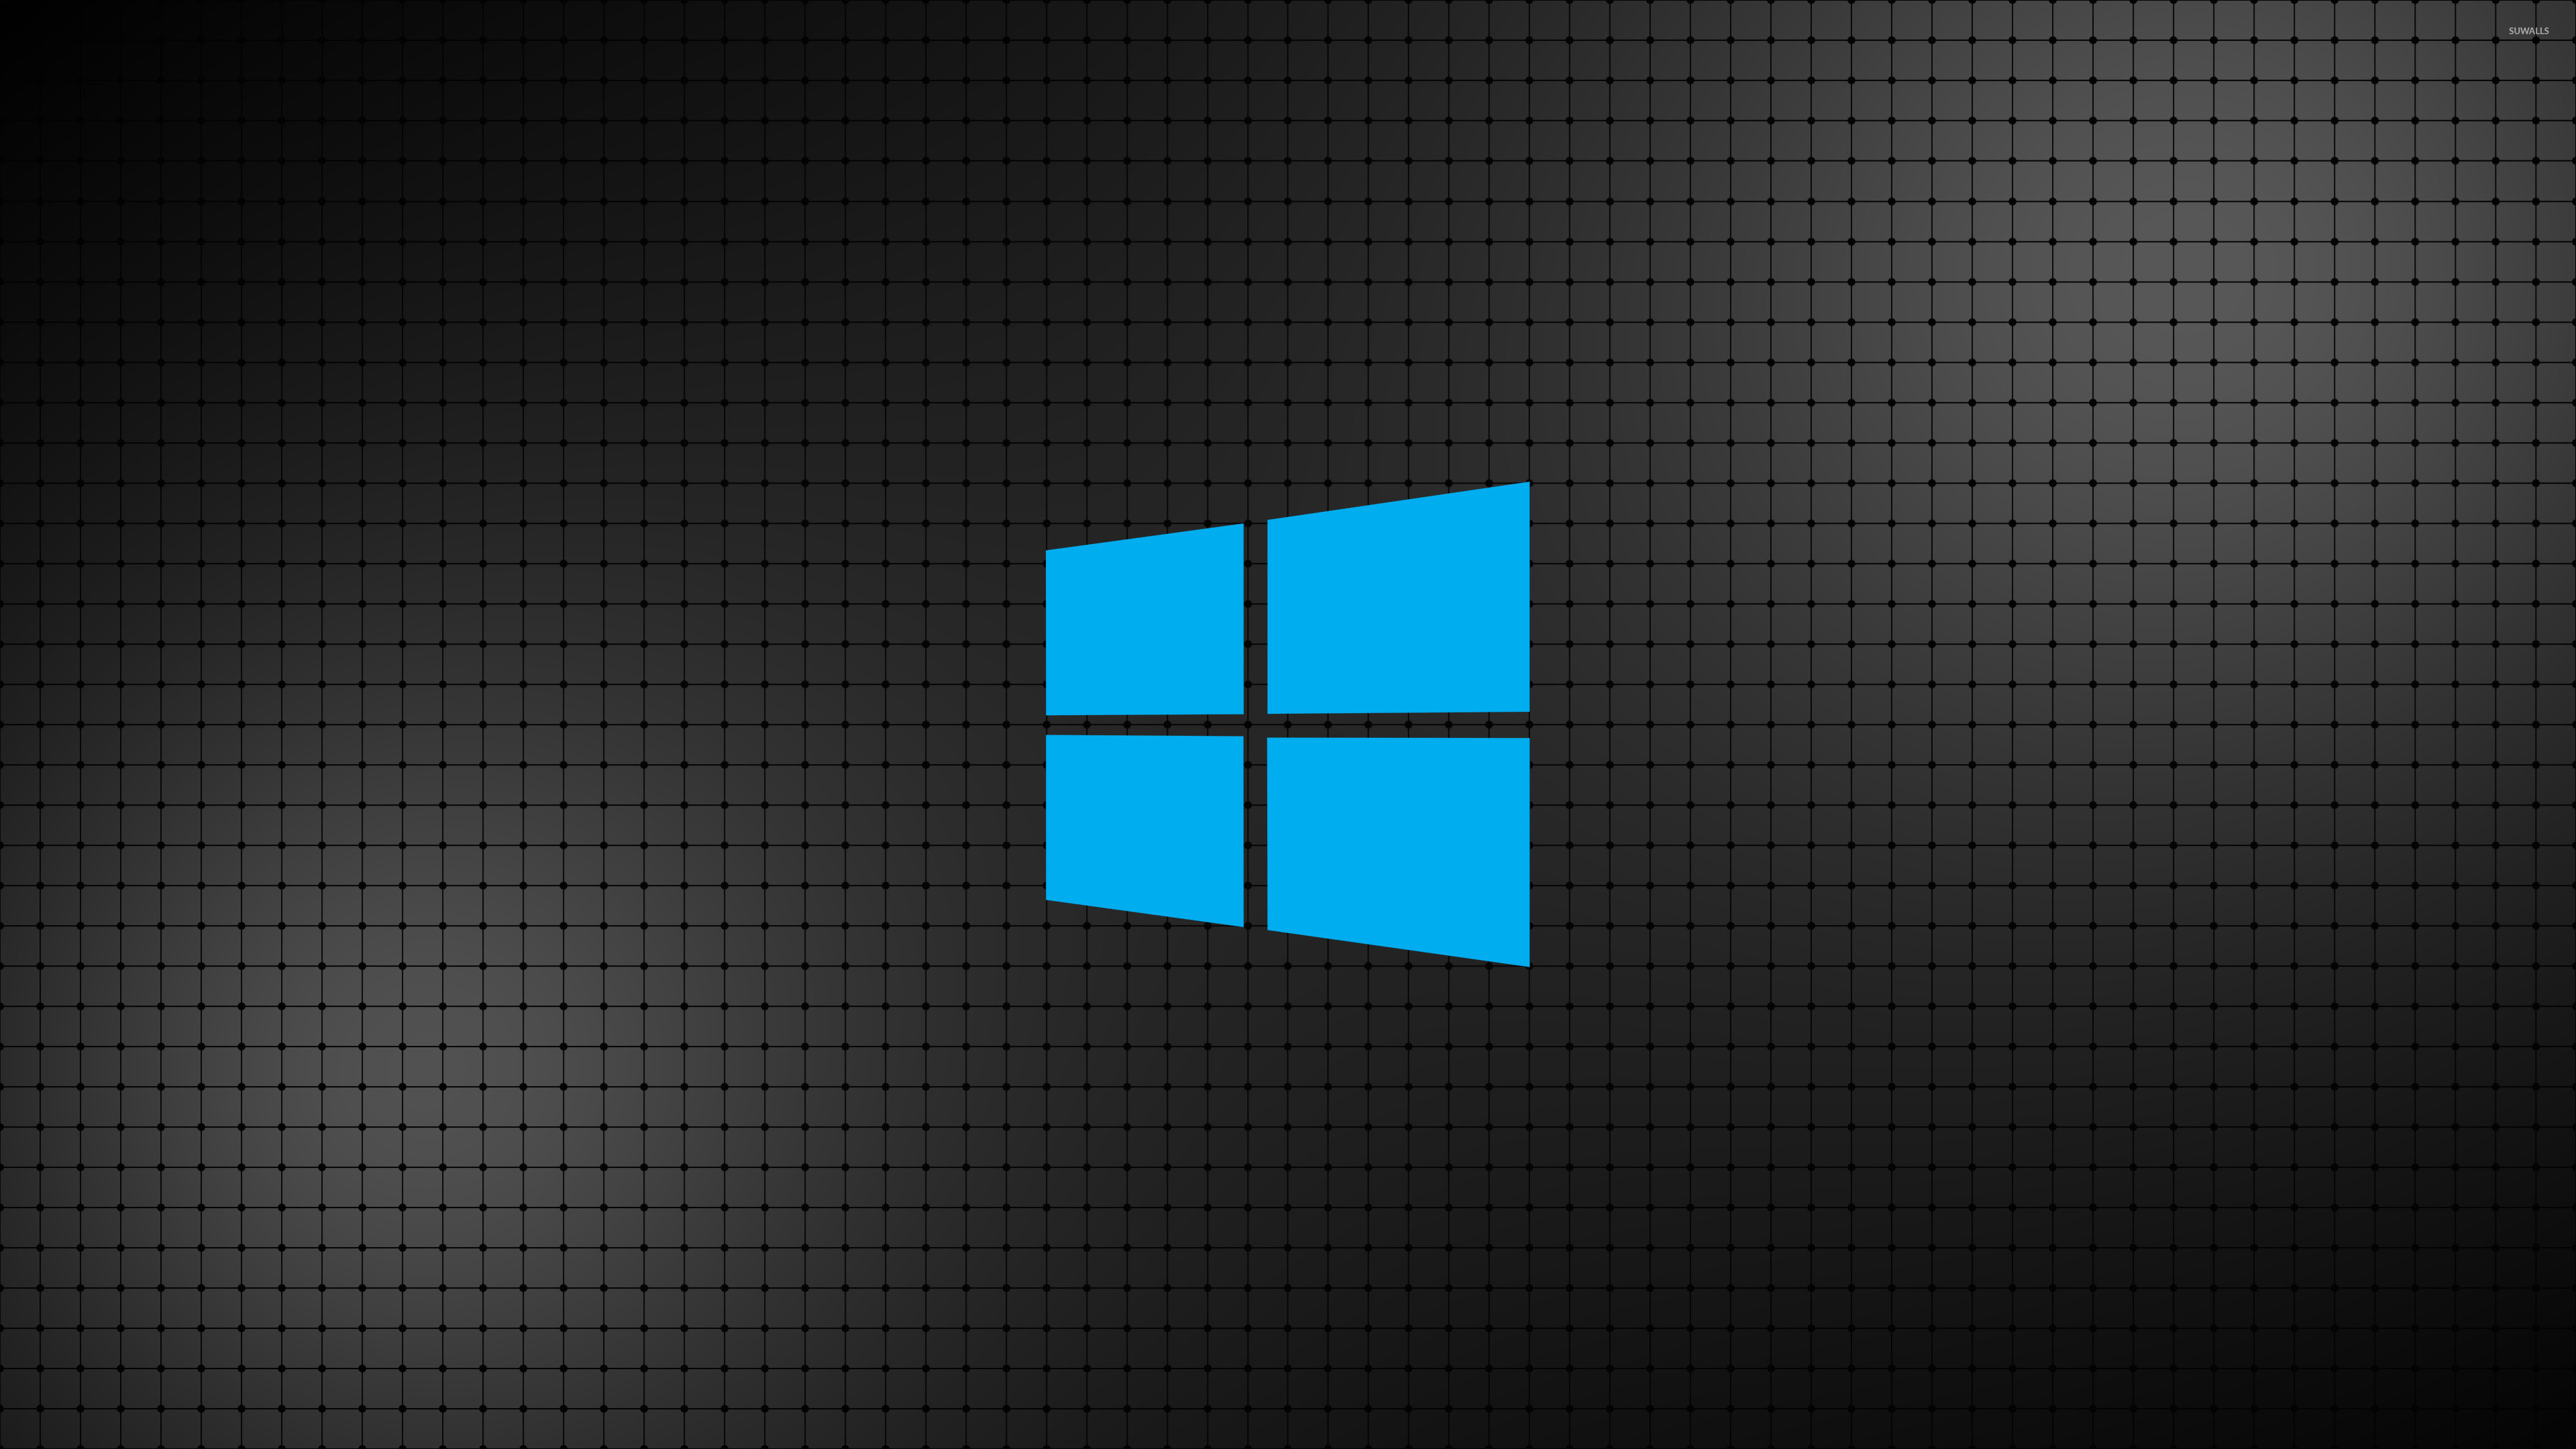 3840x2160 Windows 10 simple blue logo on a grid wallpaper